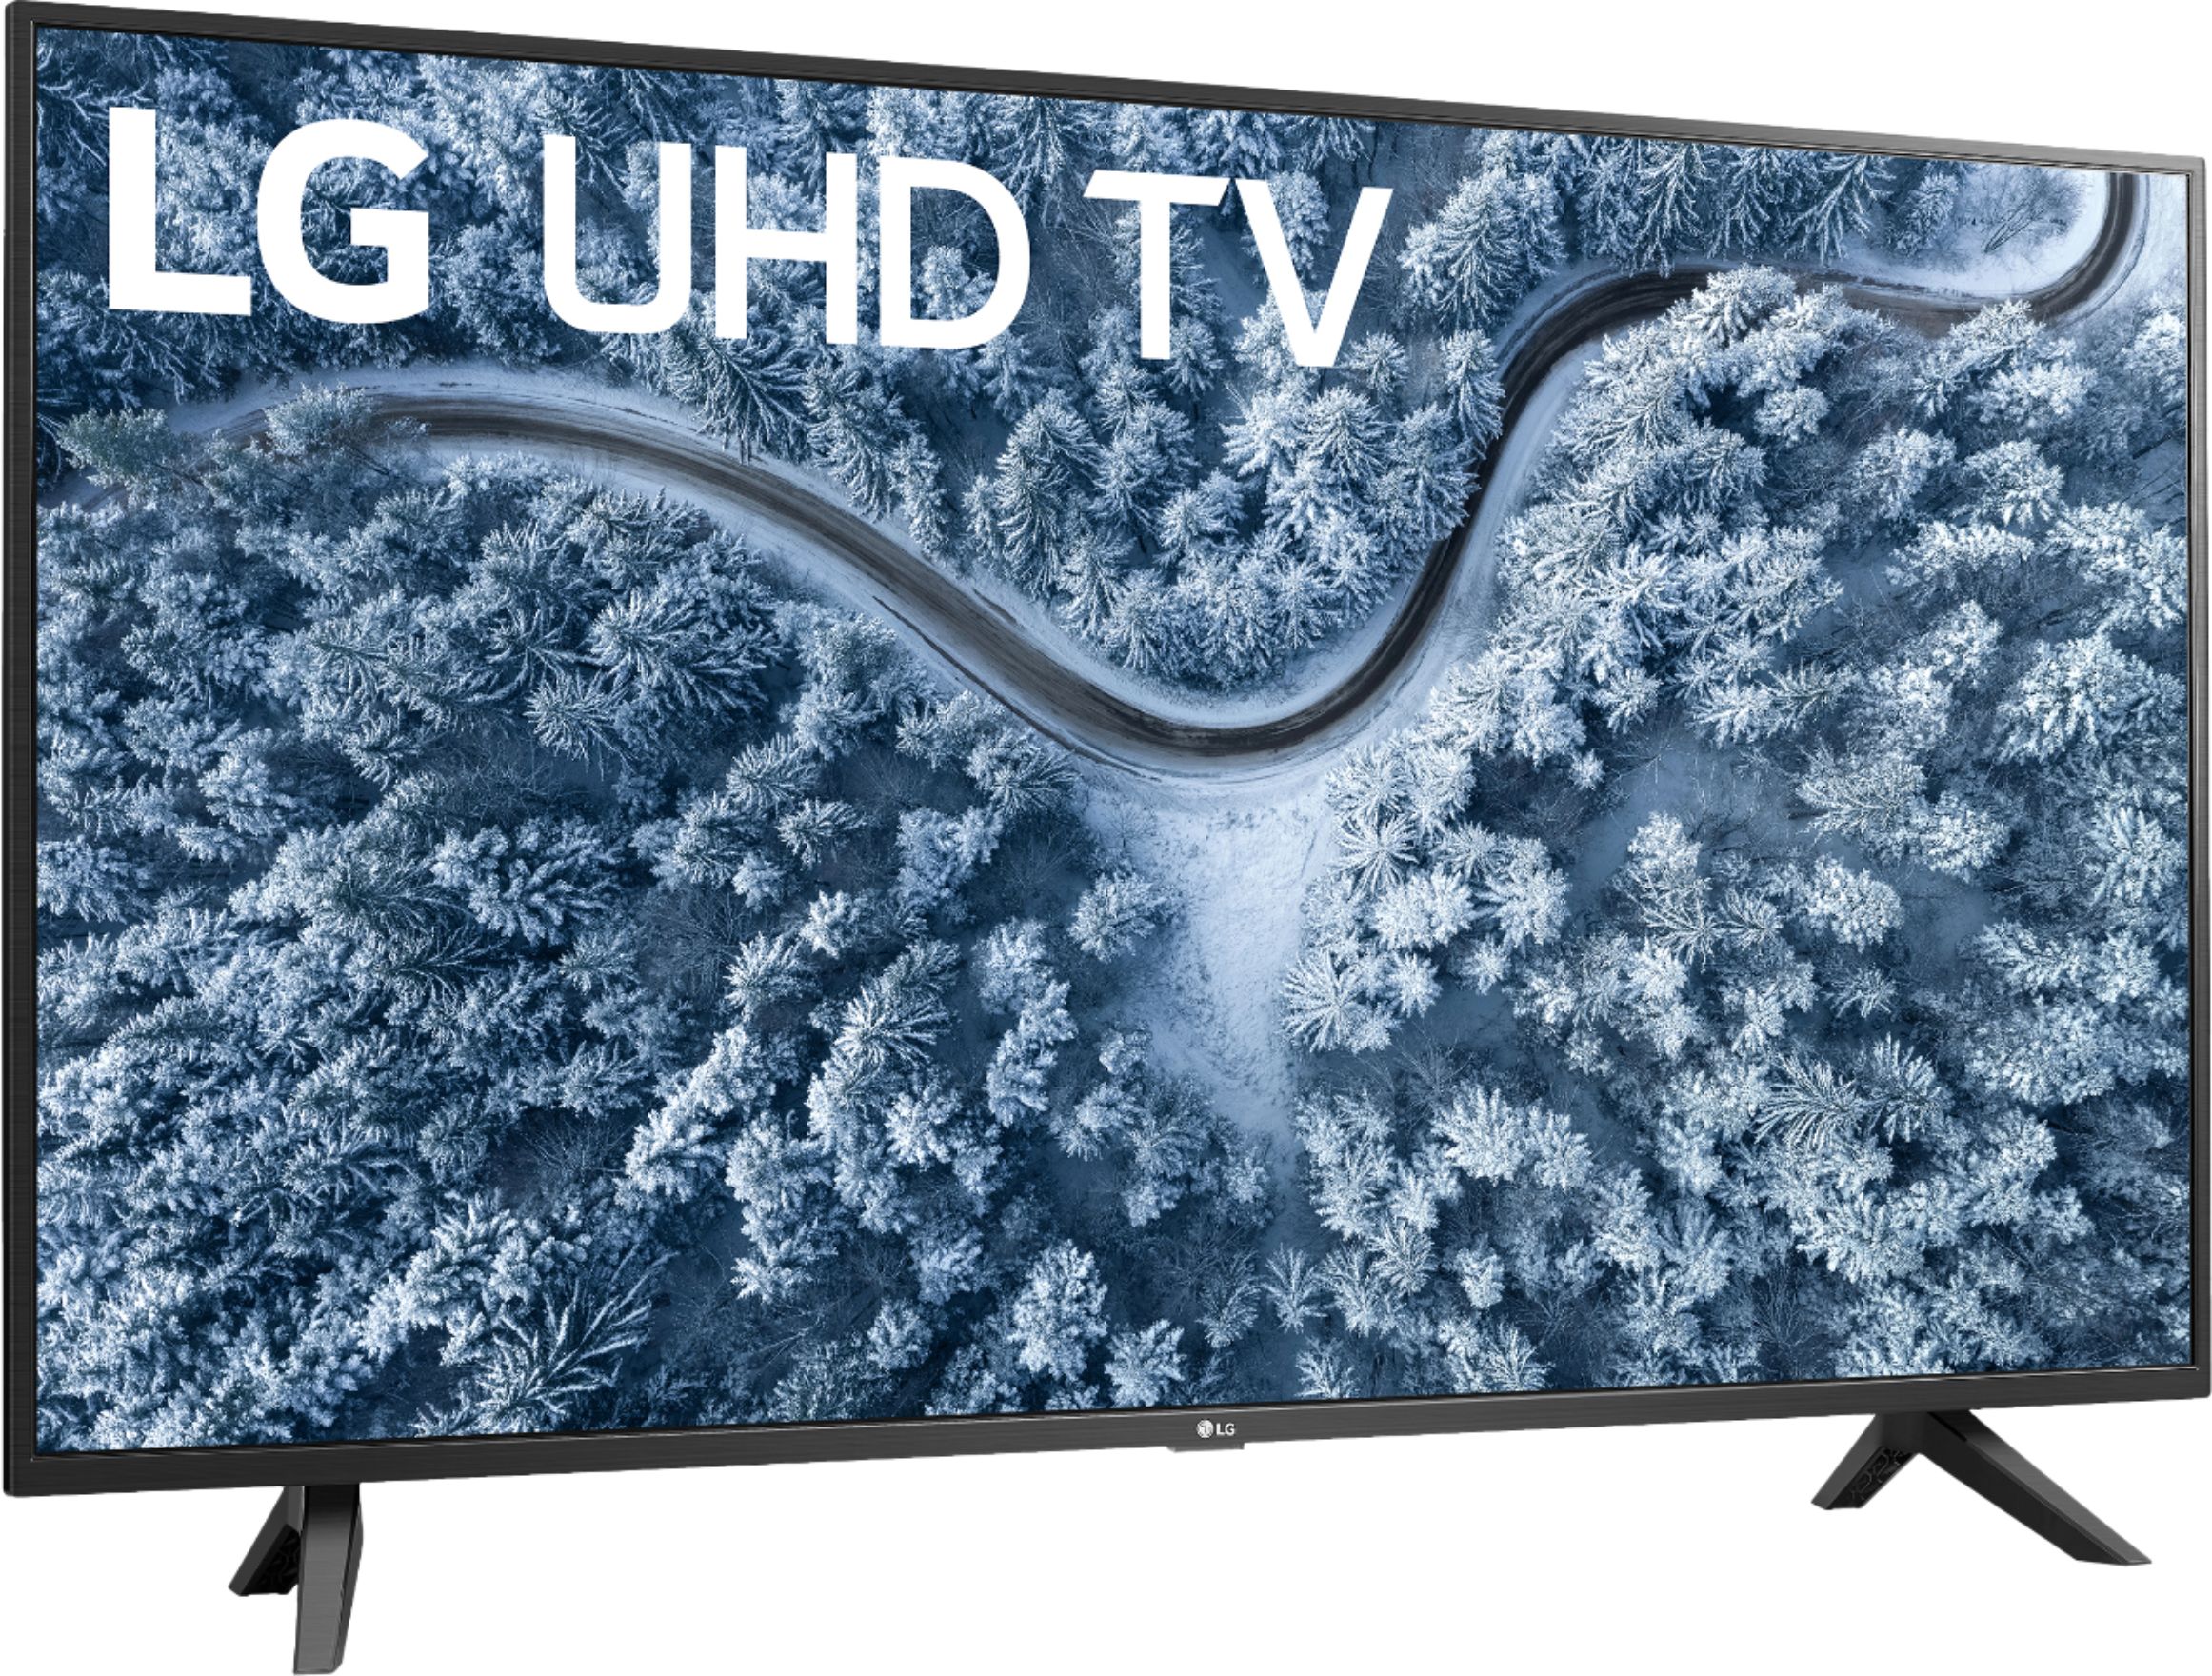 Angle View: LG - 55” Class UP7000 Series LED 4K UHD Smart webOS TV